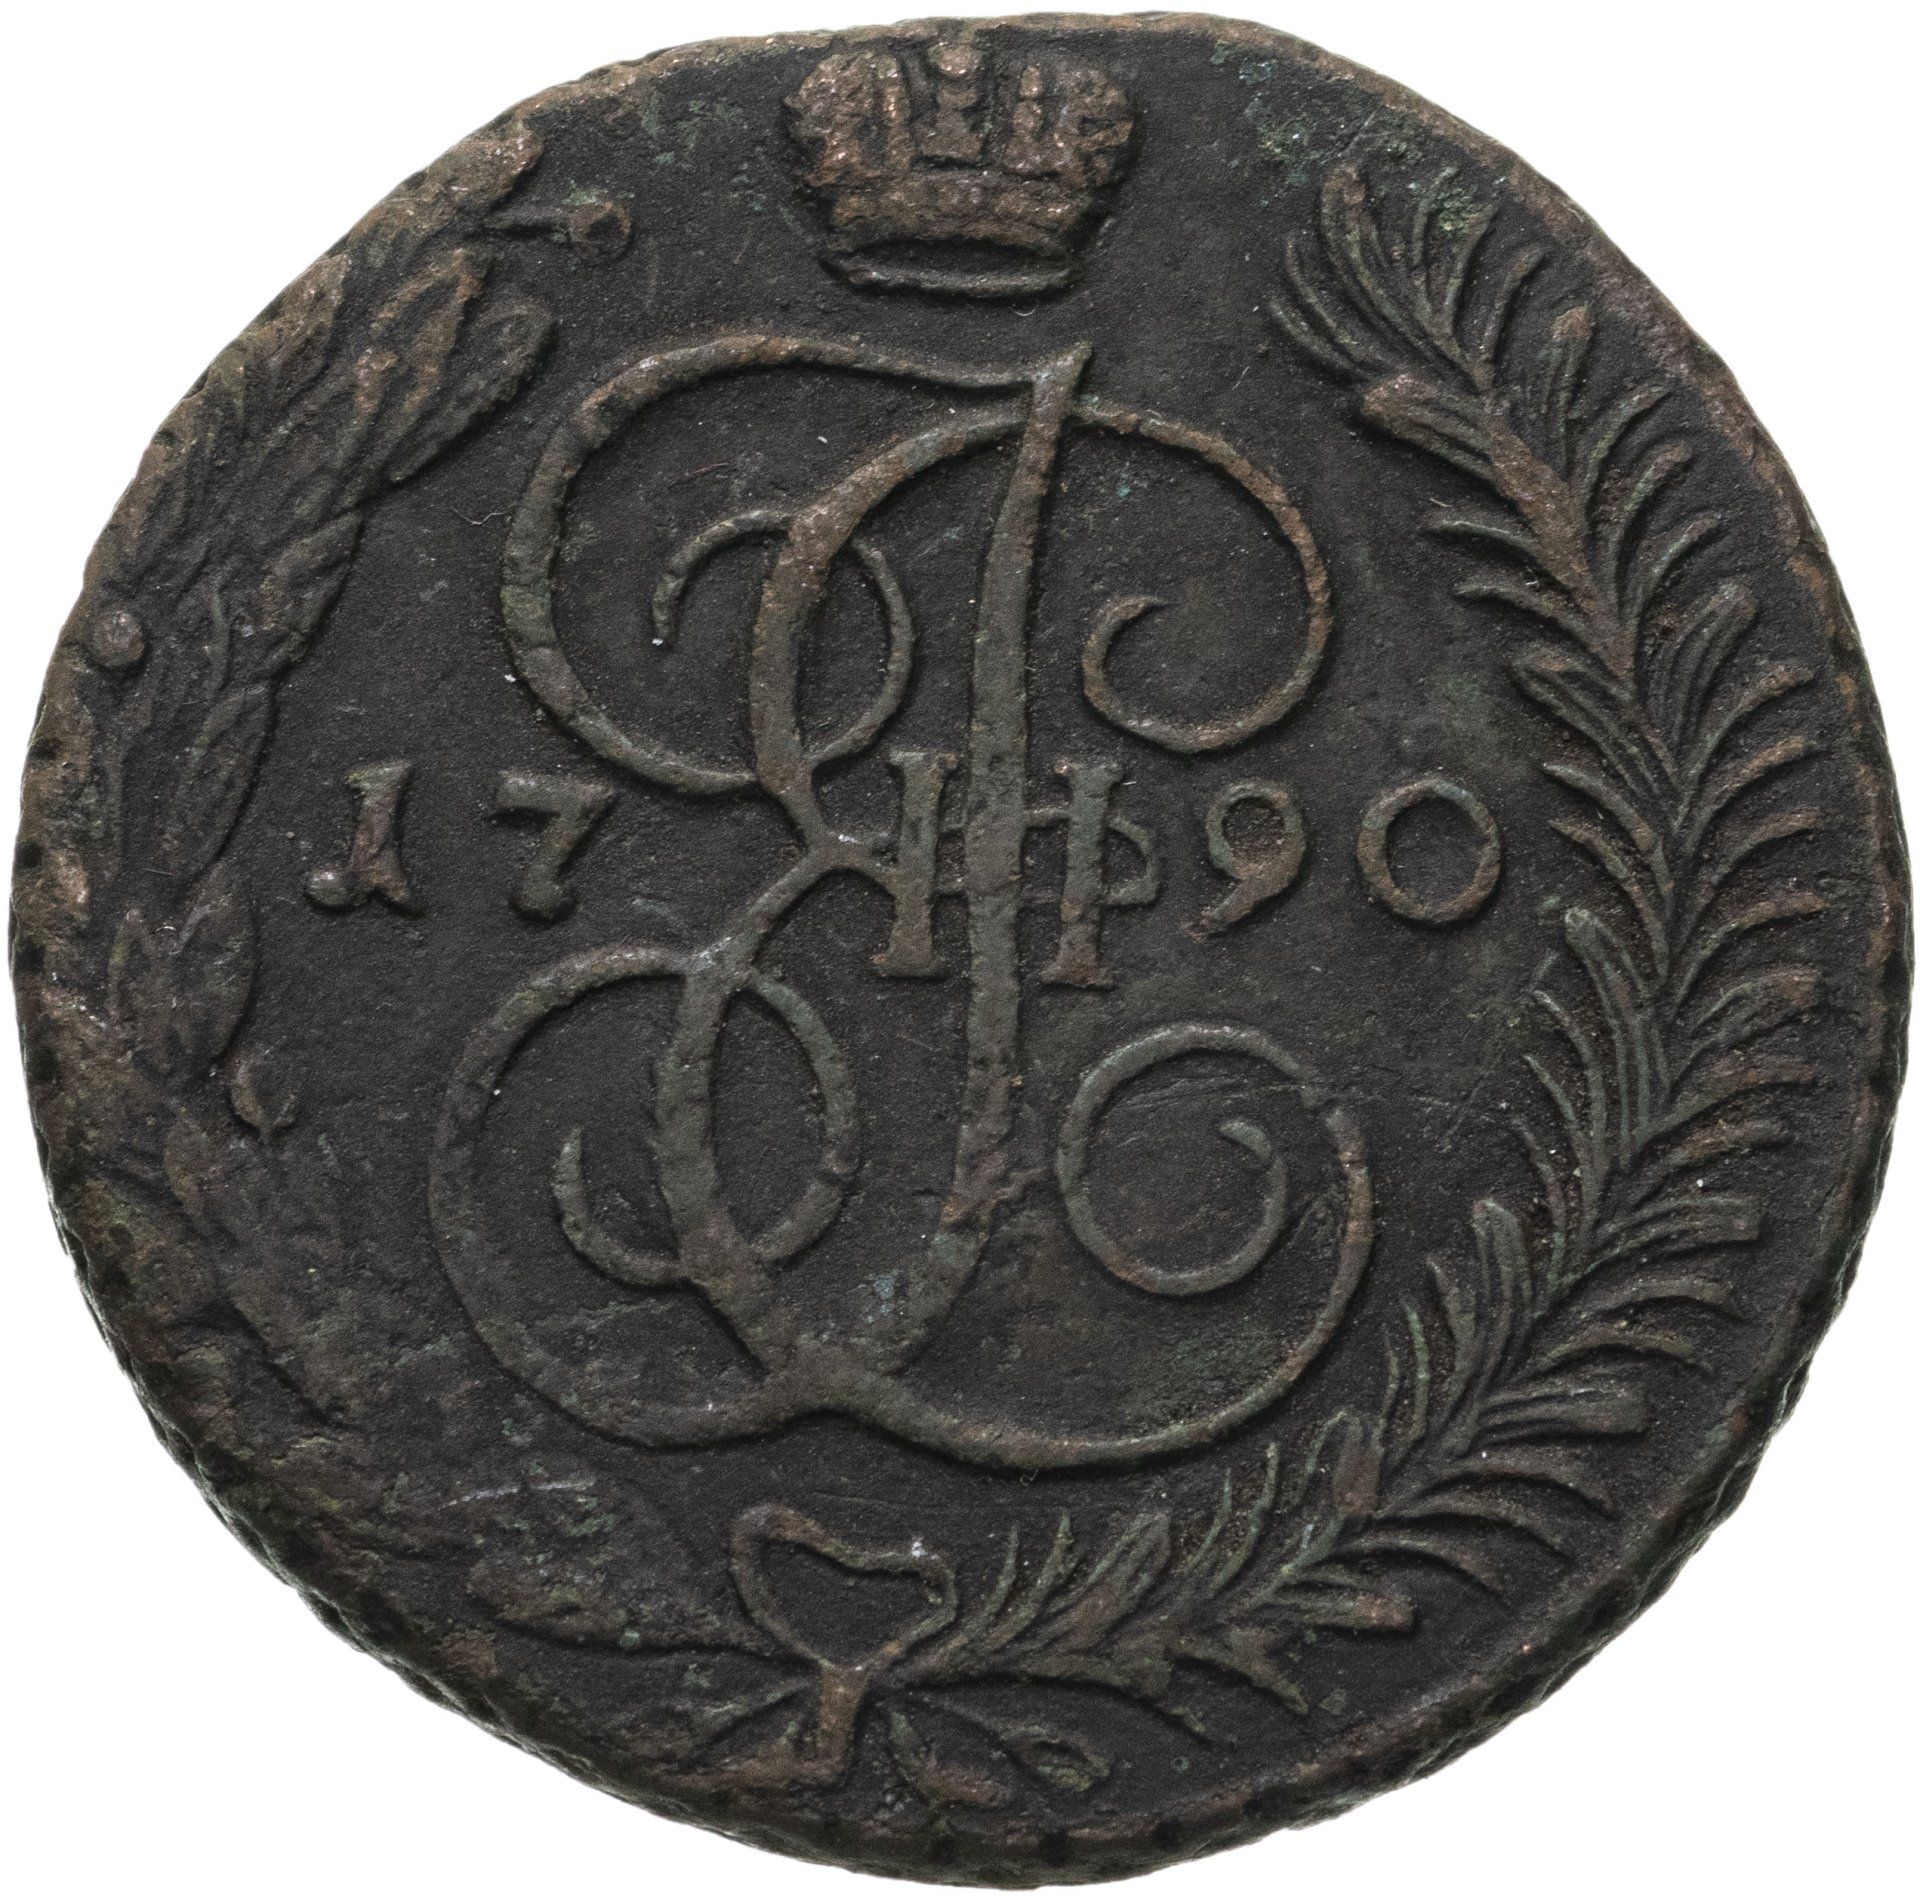 5 копеек ам. Монеты Екатерины 2 1790 5 копеек. Пять копеек ам.